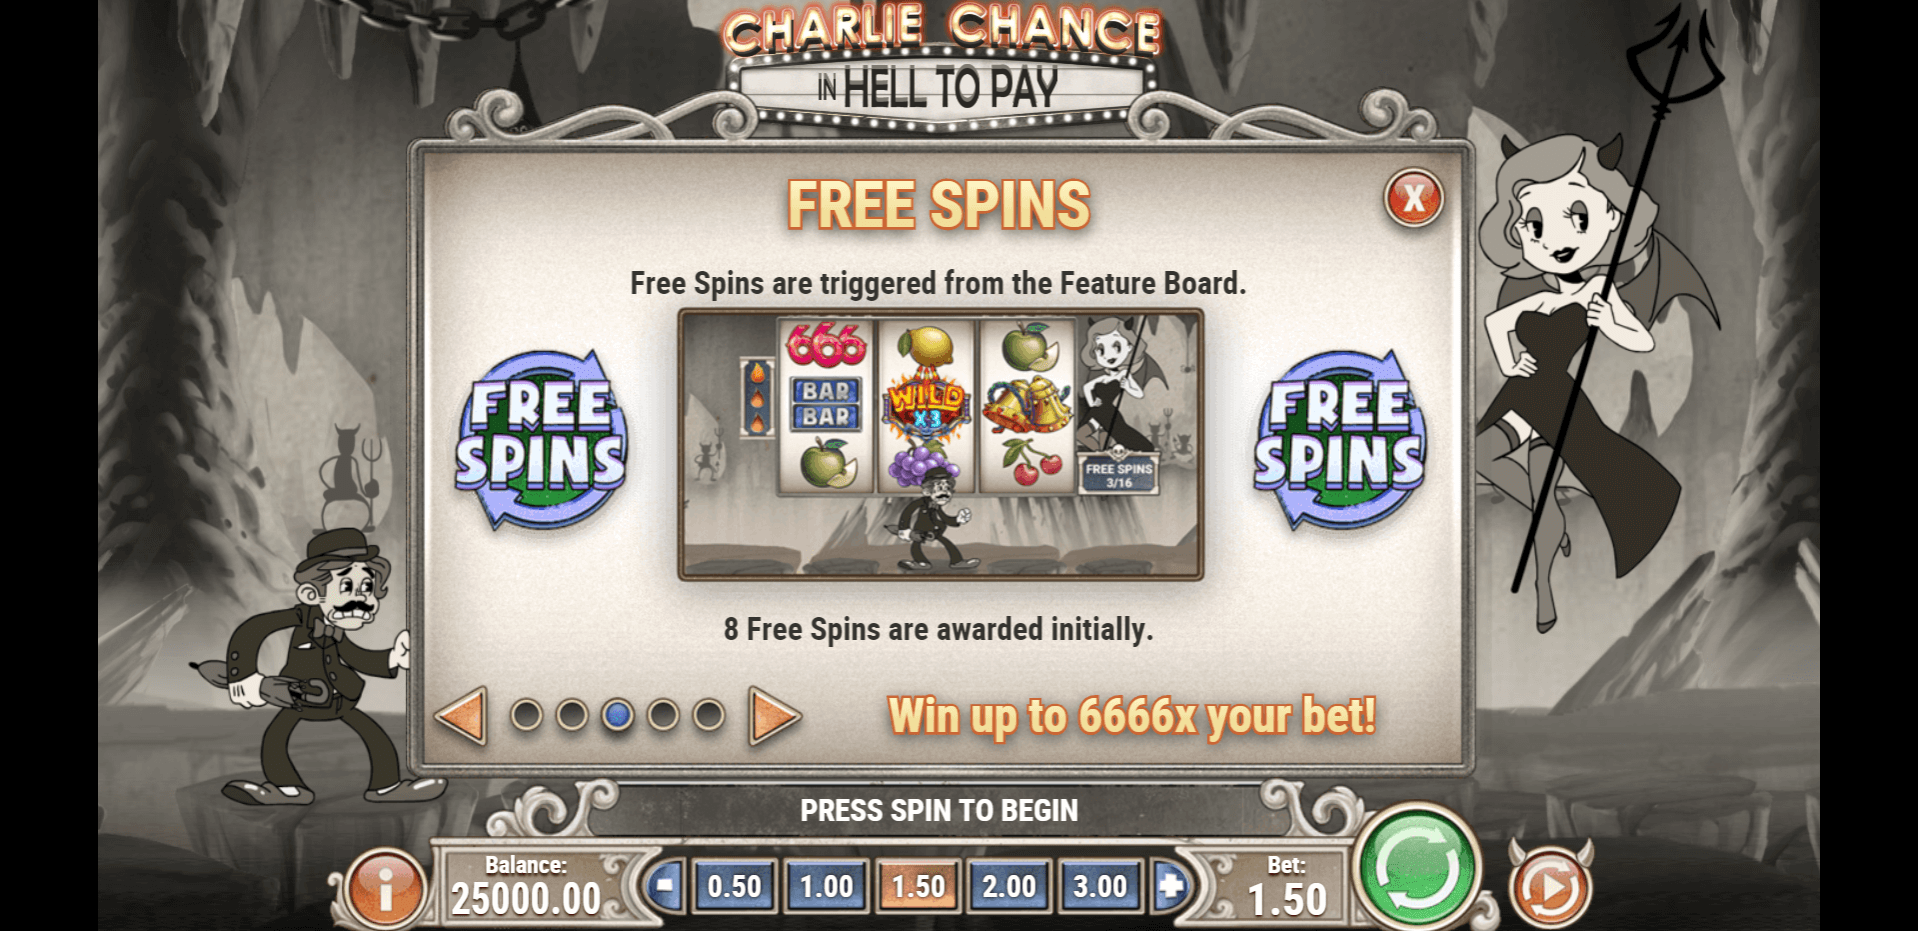 charlie chance slot machine detail image 0